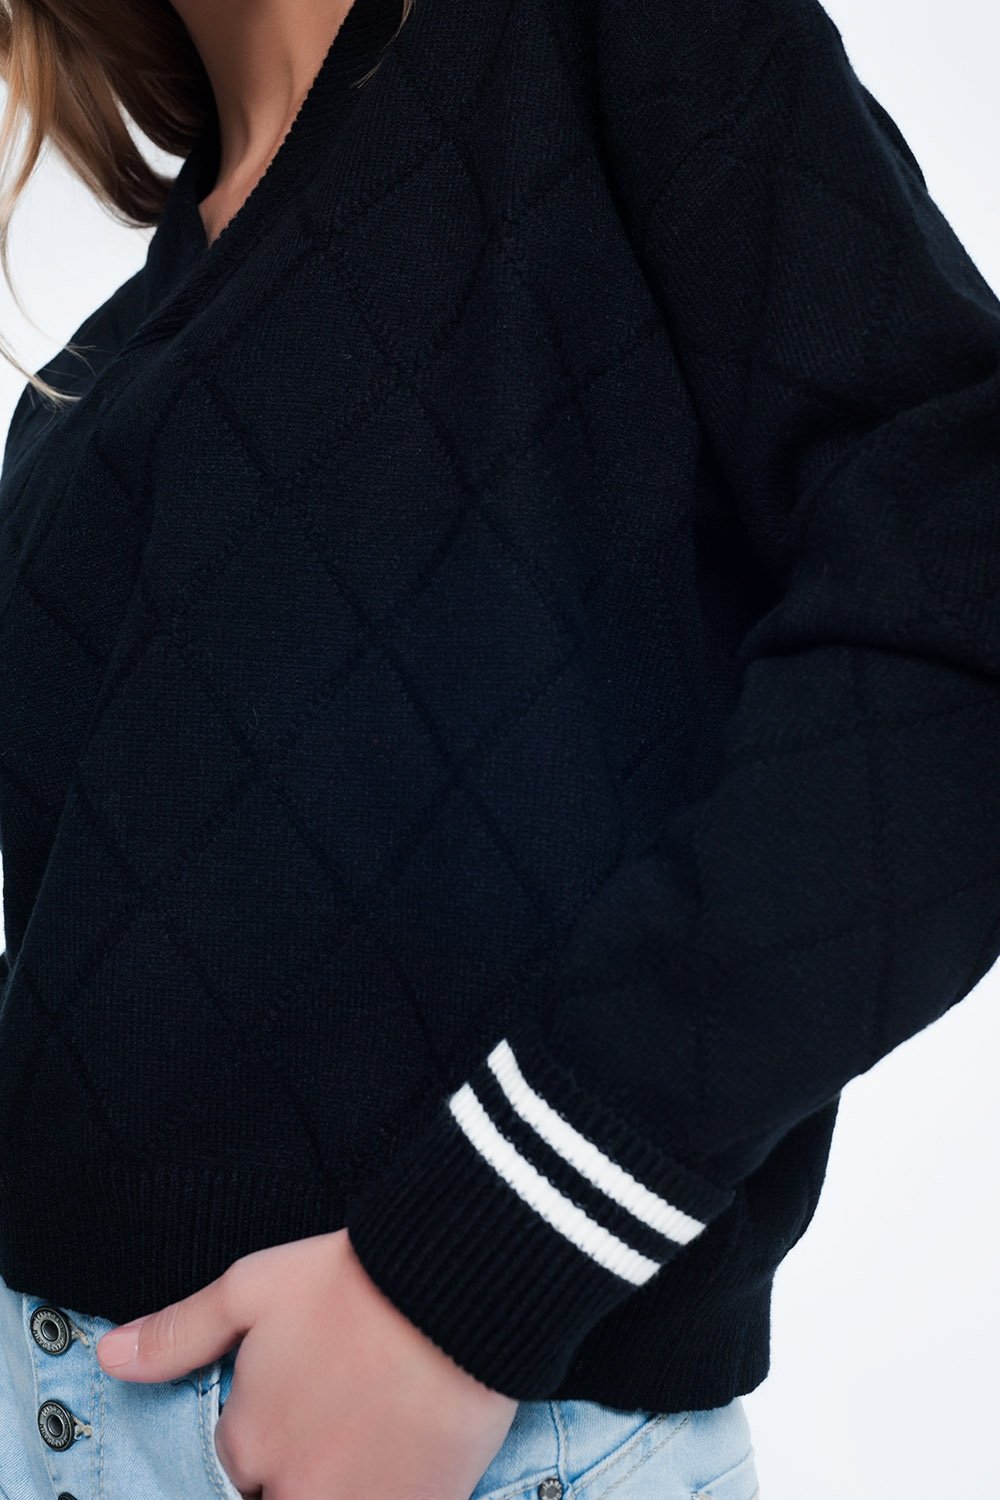 Black Sweater With Diamond Pattern